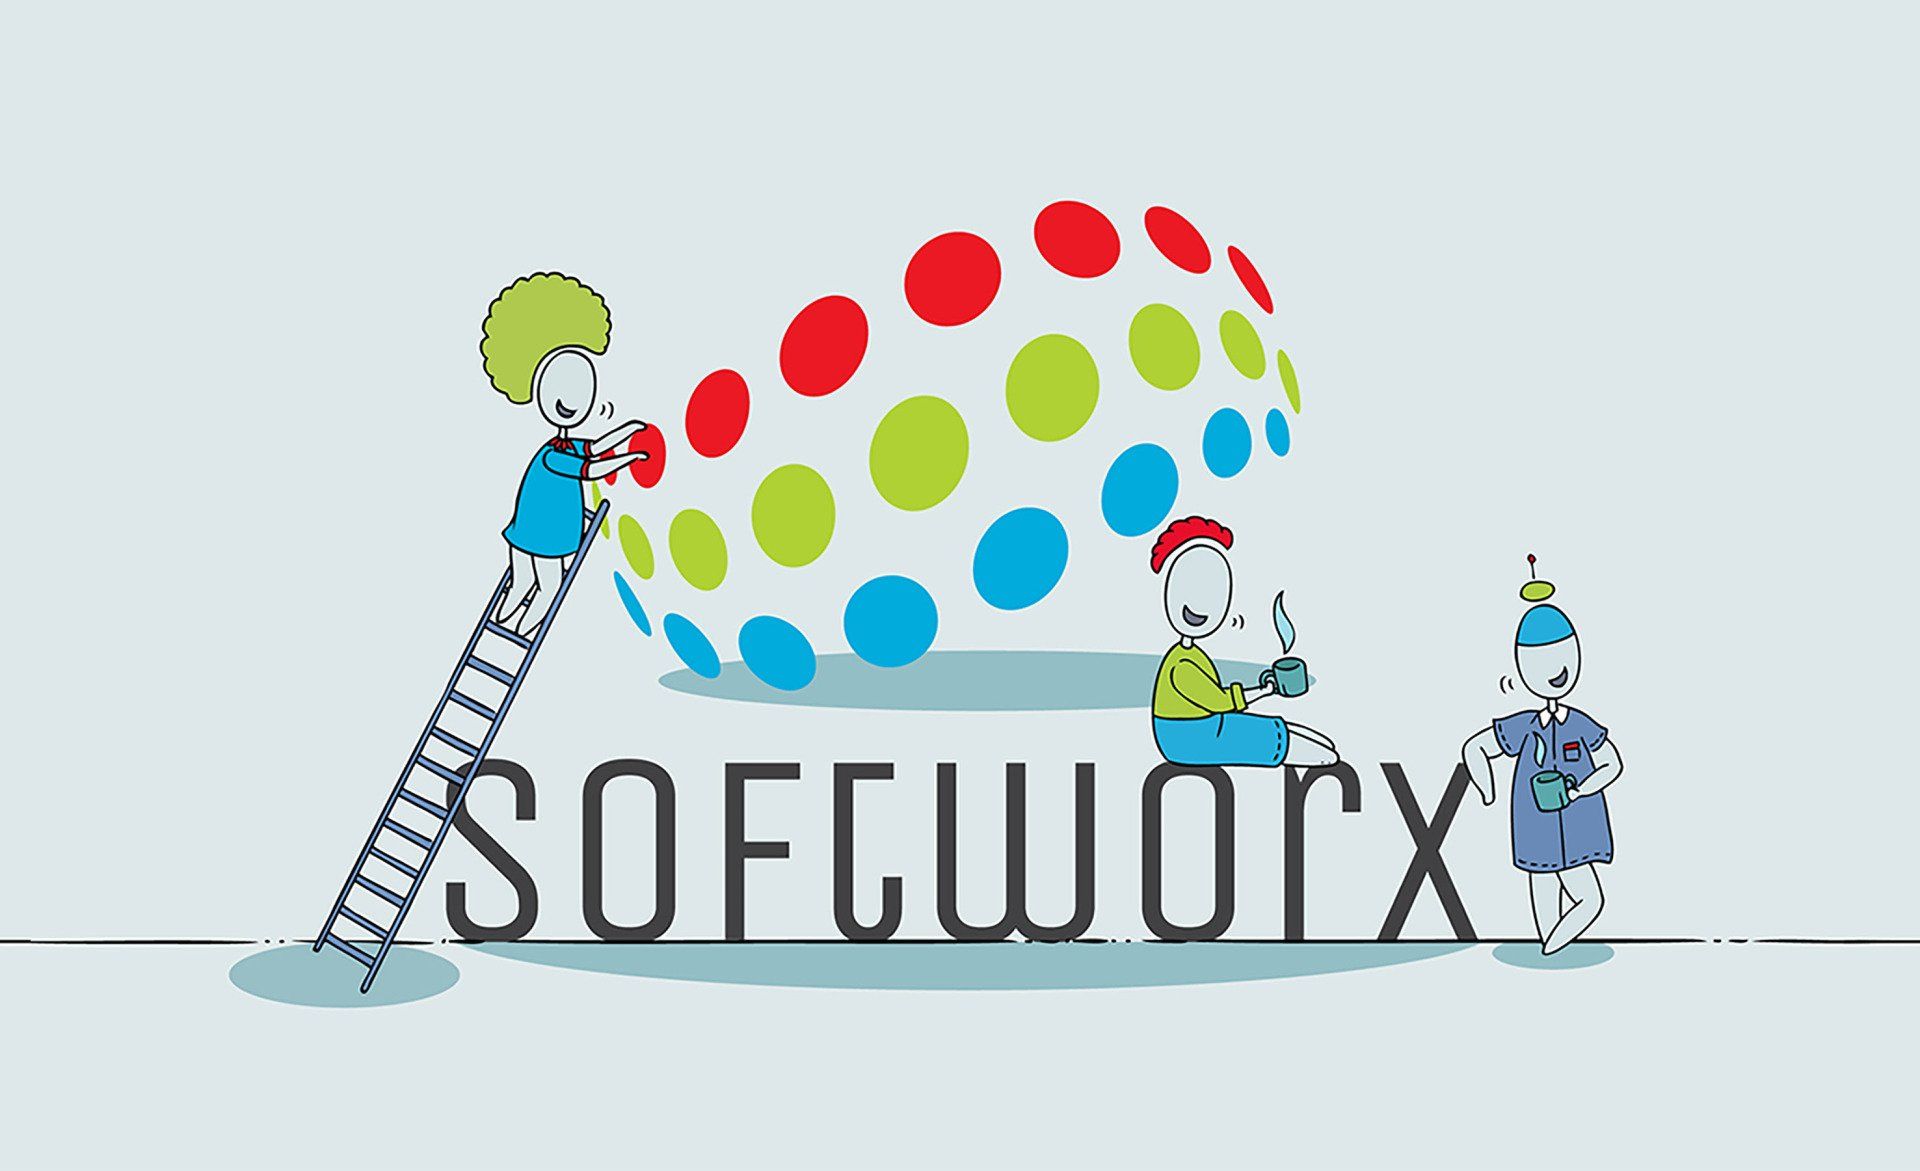 (c) Softworx.co